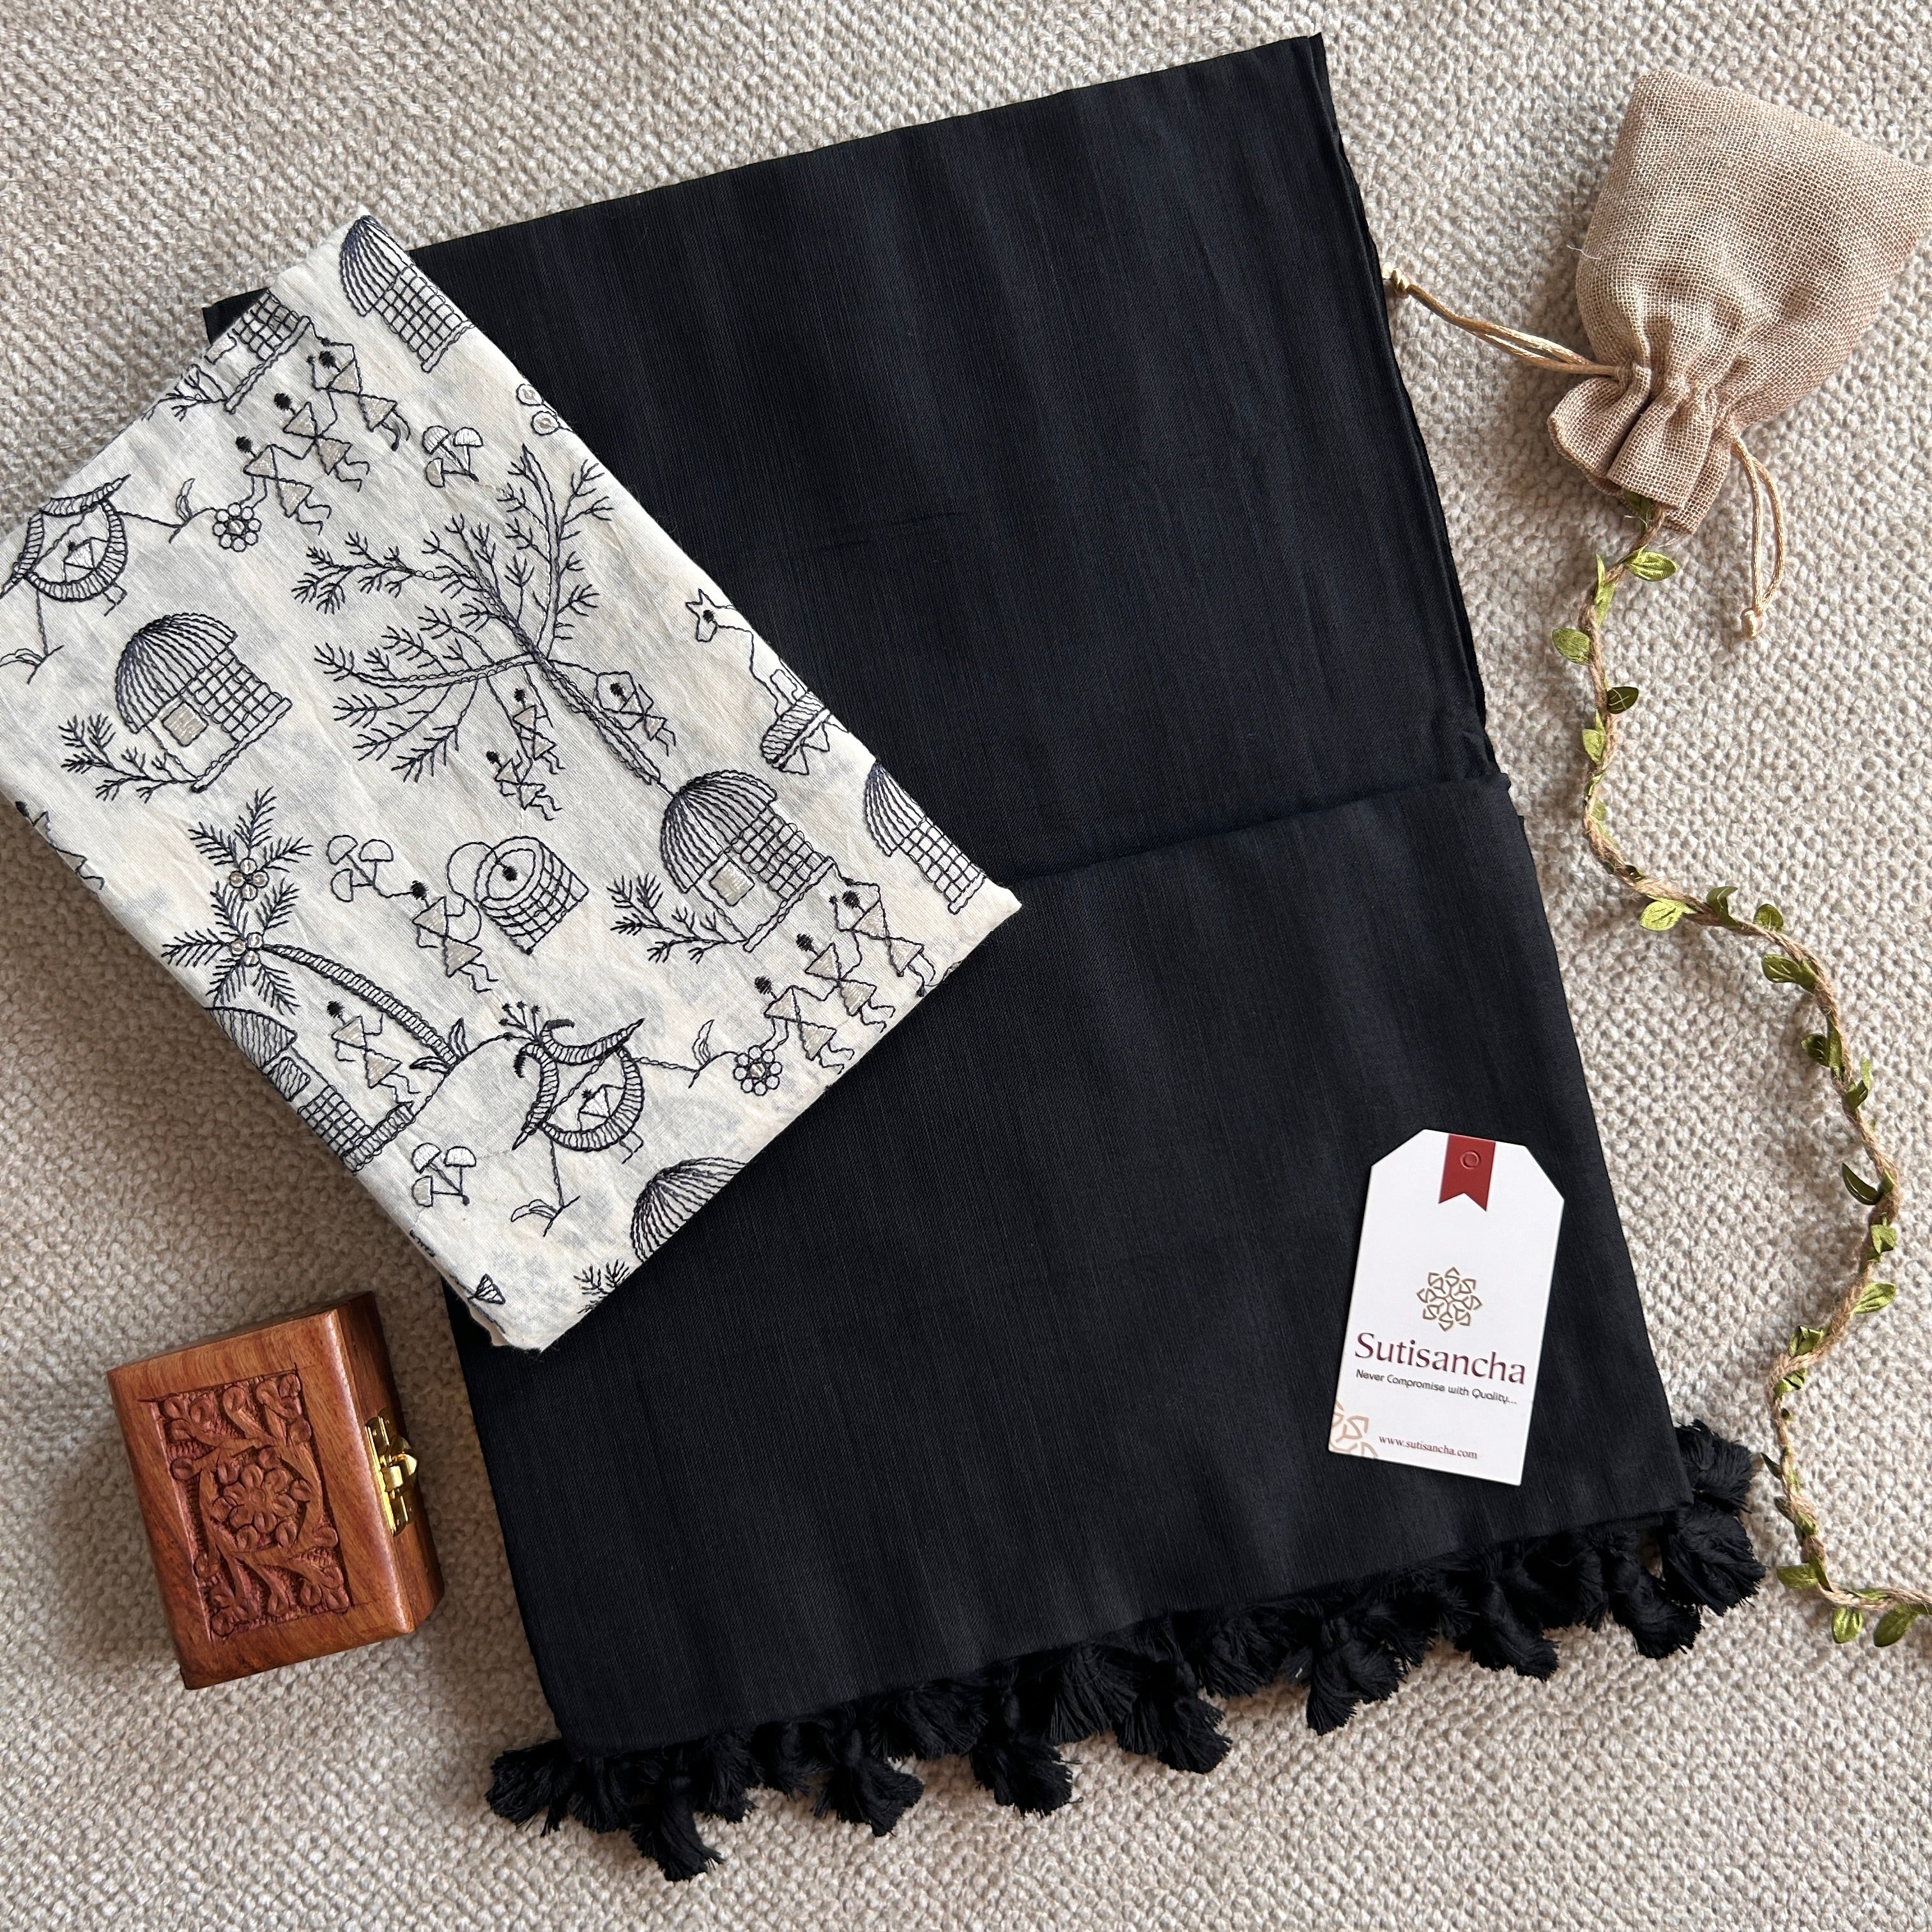 Sutisancha Black Handloom Cotton Saree With Blouse